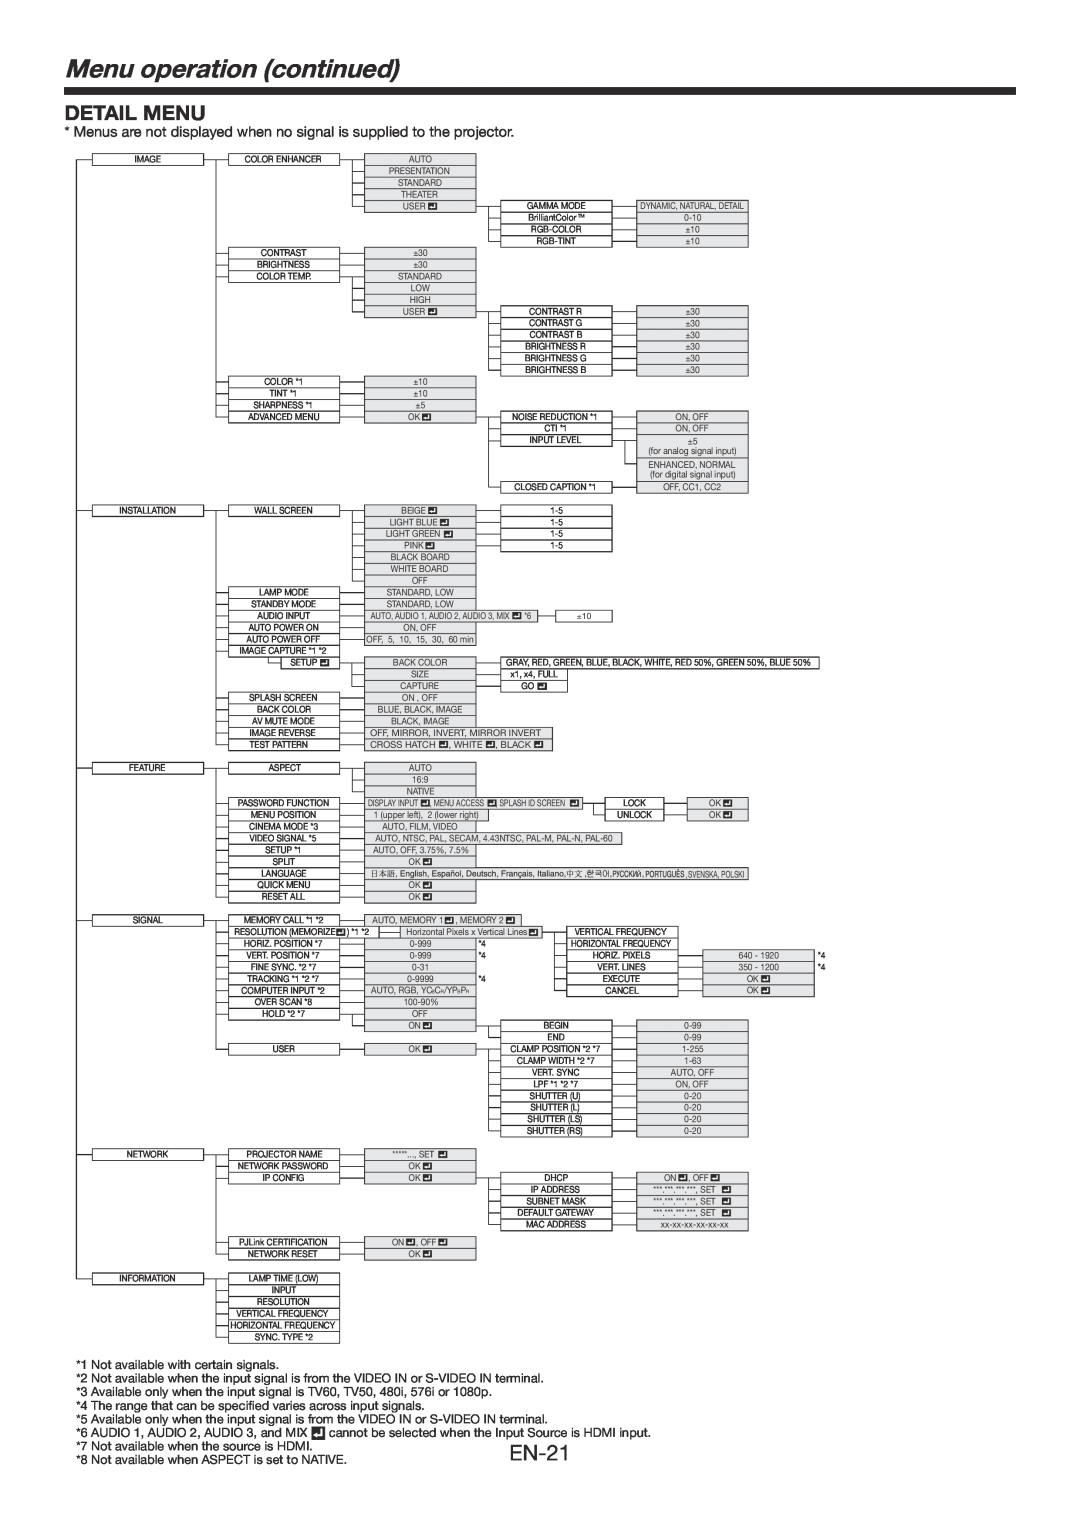 Mitsubishi Electronics FD730U-G user manual Detail Menu, Menu operation continued, Horizontal Frequency 